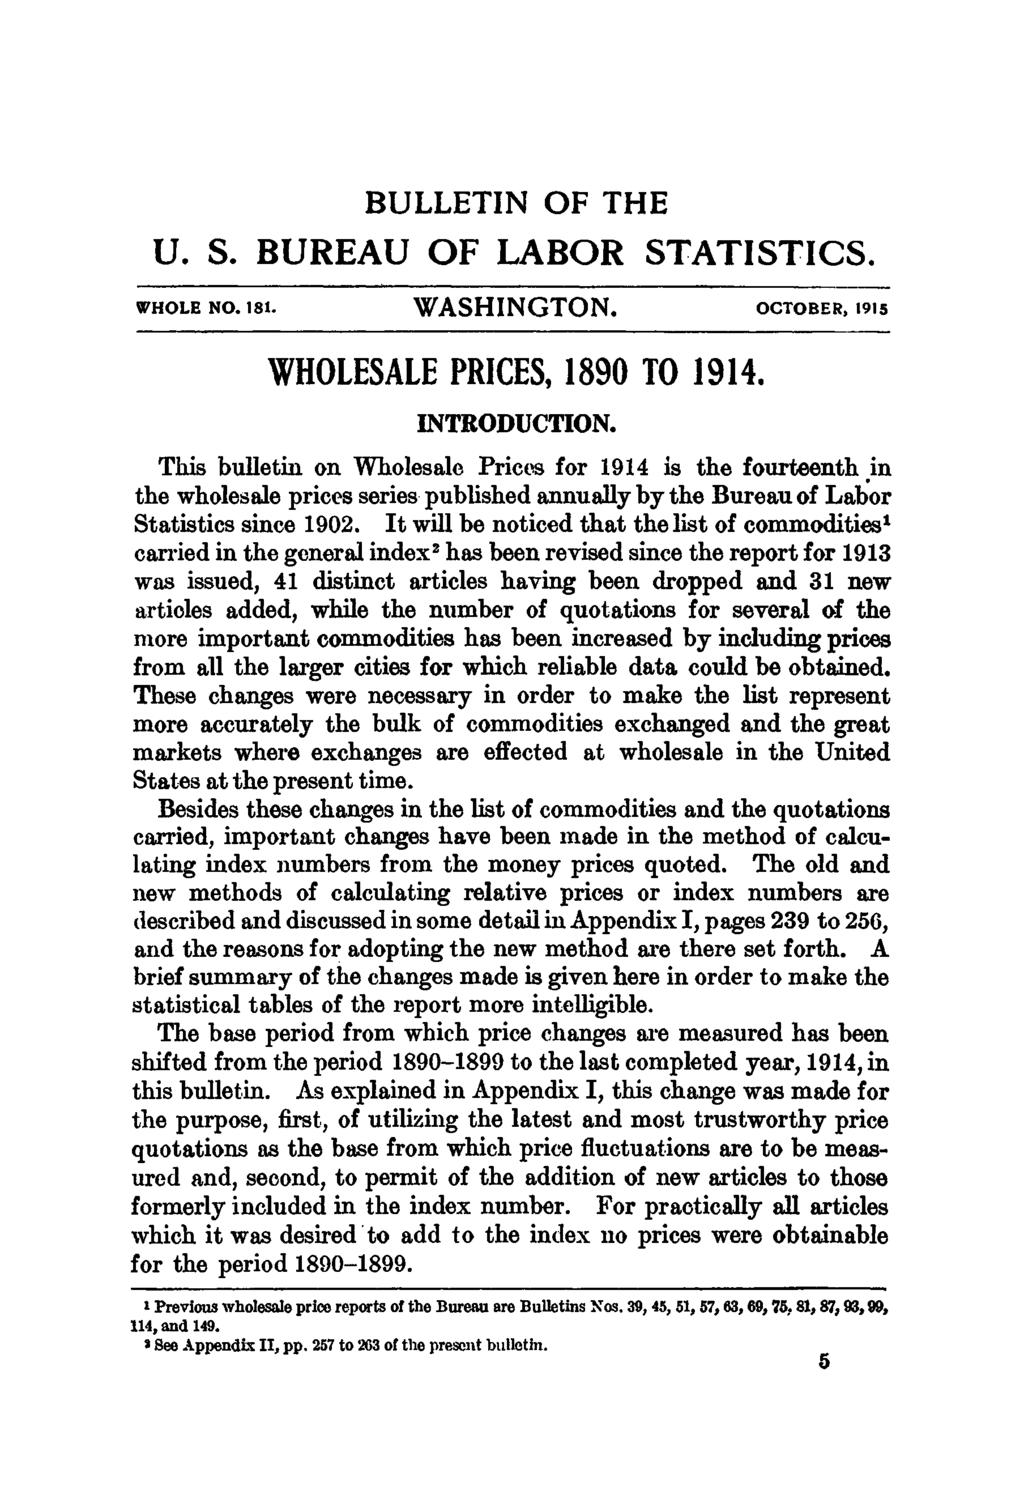 BULLETIN OF THE U. S. BUREAU OF LABOR STATISTICS. WHOLE NO. 181. WASHINGTON. OCTOBER, 1915 WHOLESALE PRICES, 1890 TO INTRODUCTION.